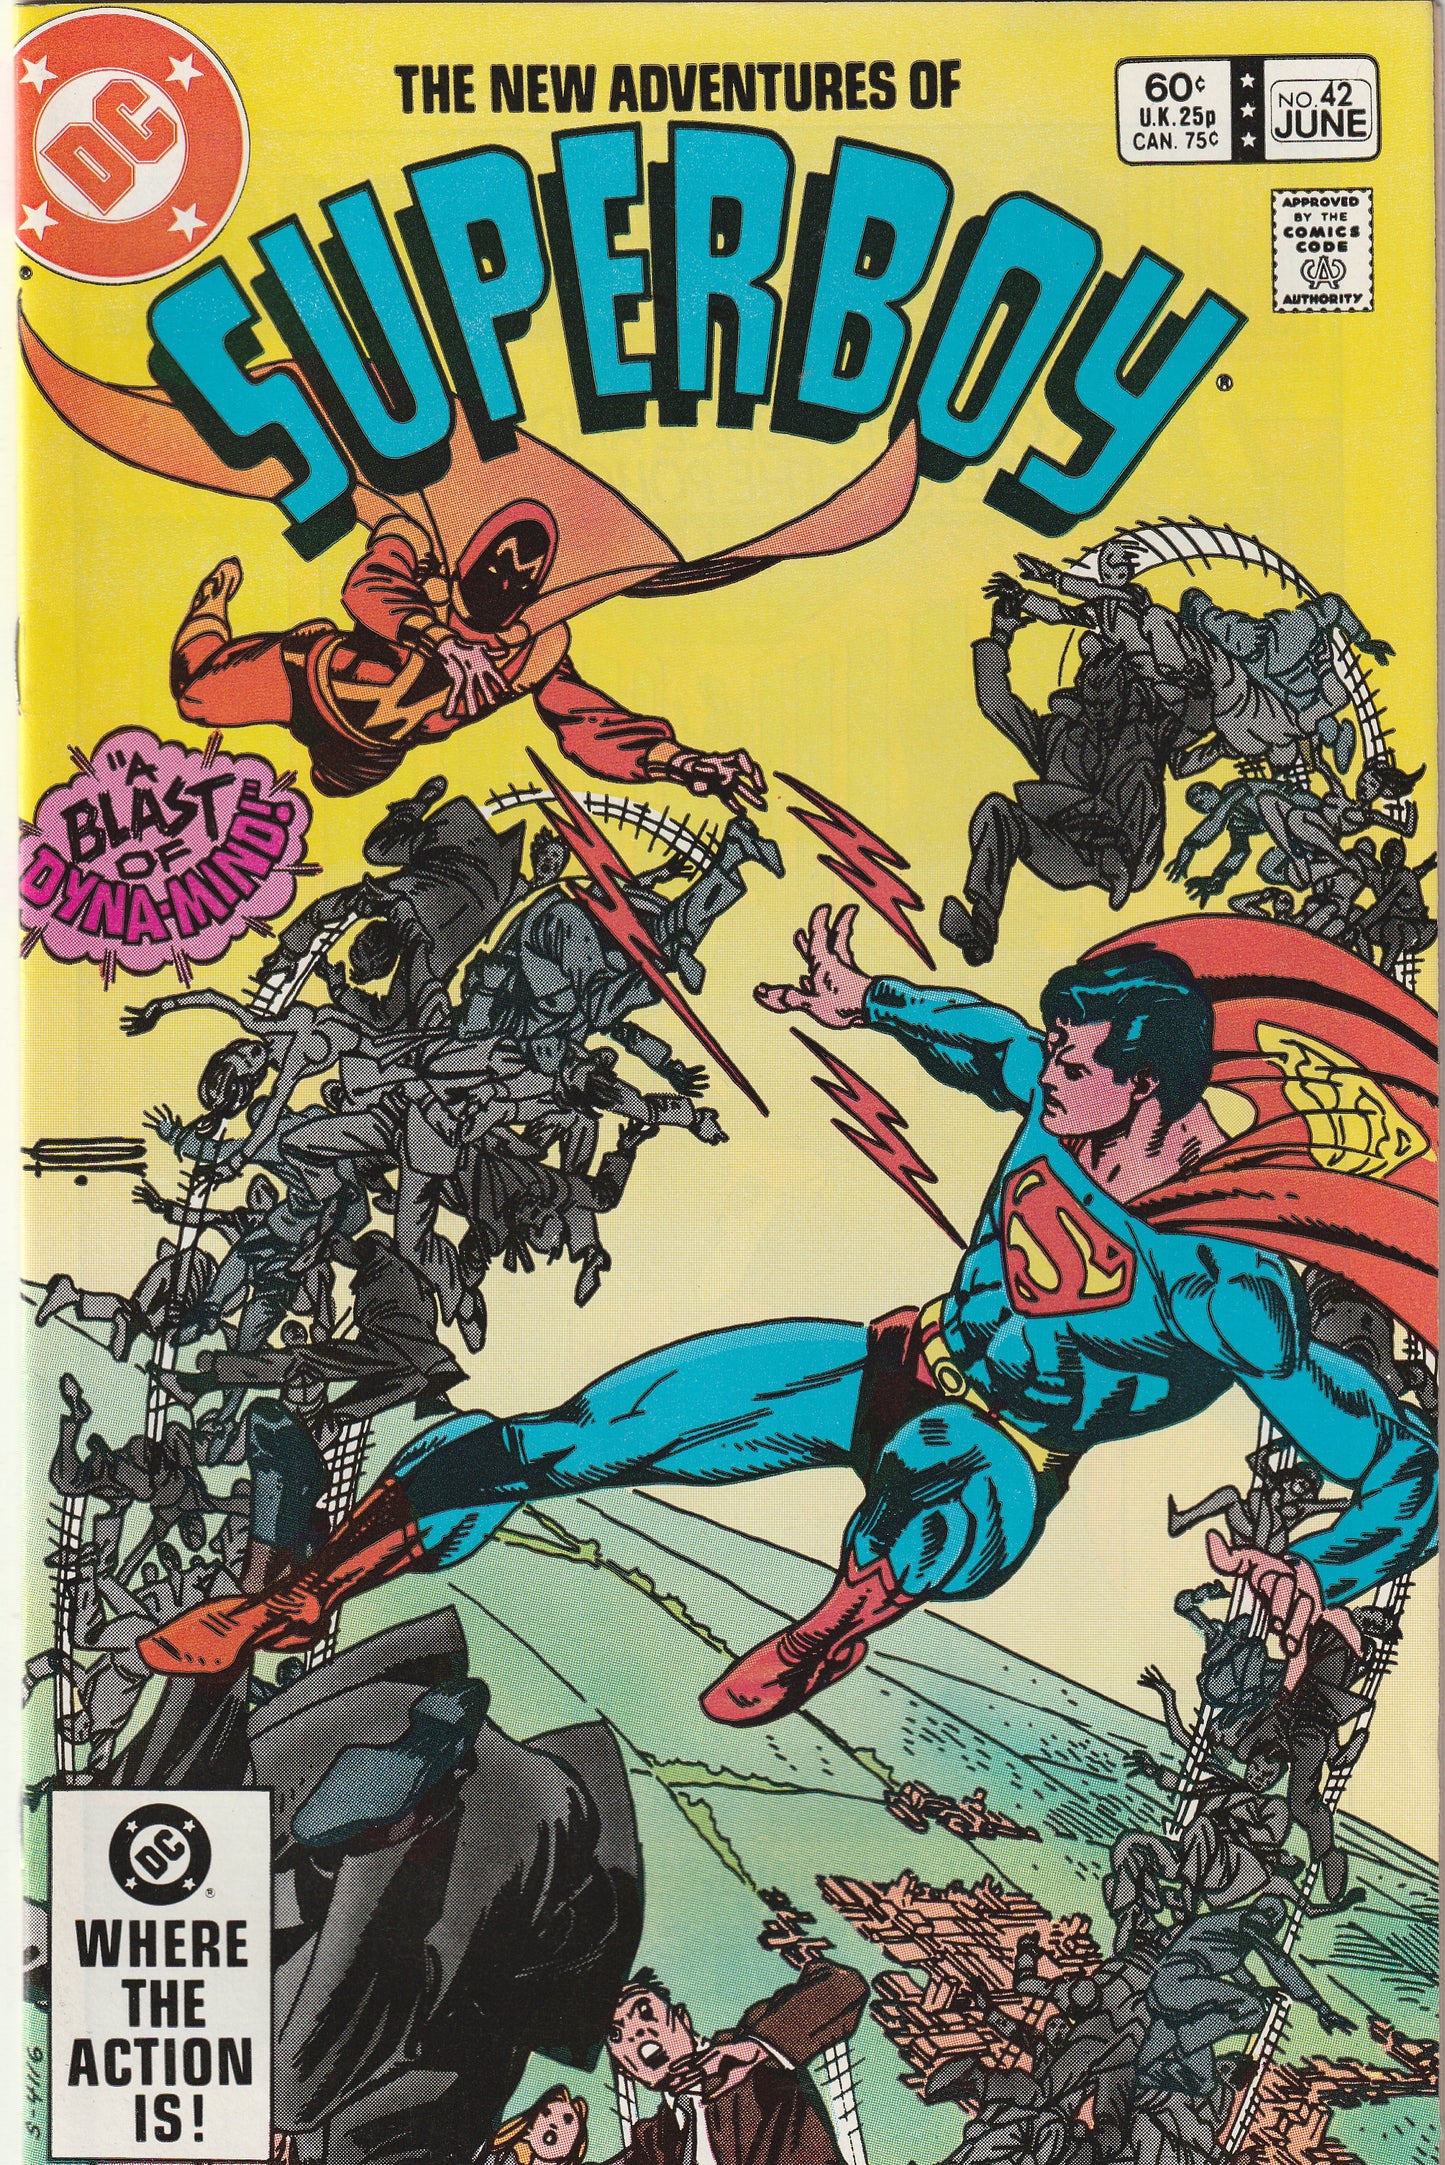 New Adventures of Superboy #42 (1983)